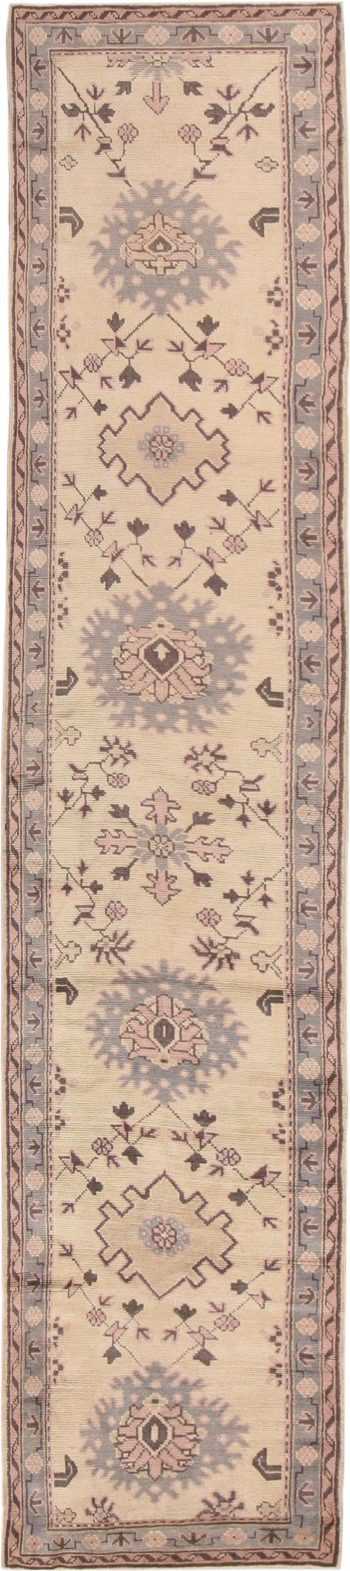 Decorative Antique Turkish Oushak Runner Rug #41776 by Nazmiyal Antique Rugs